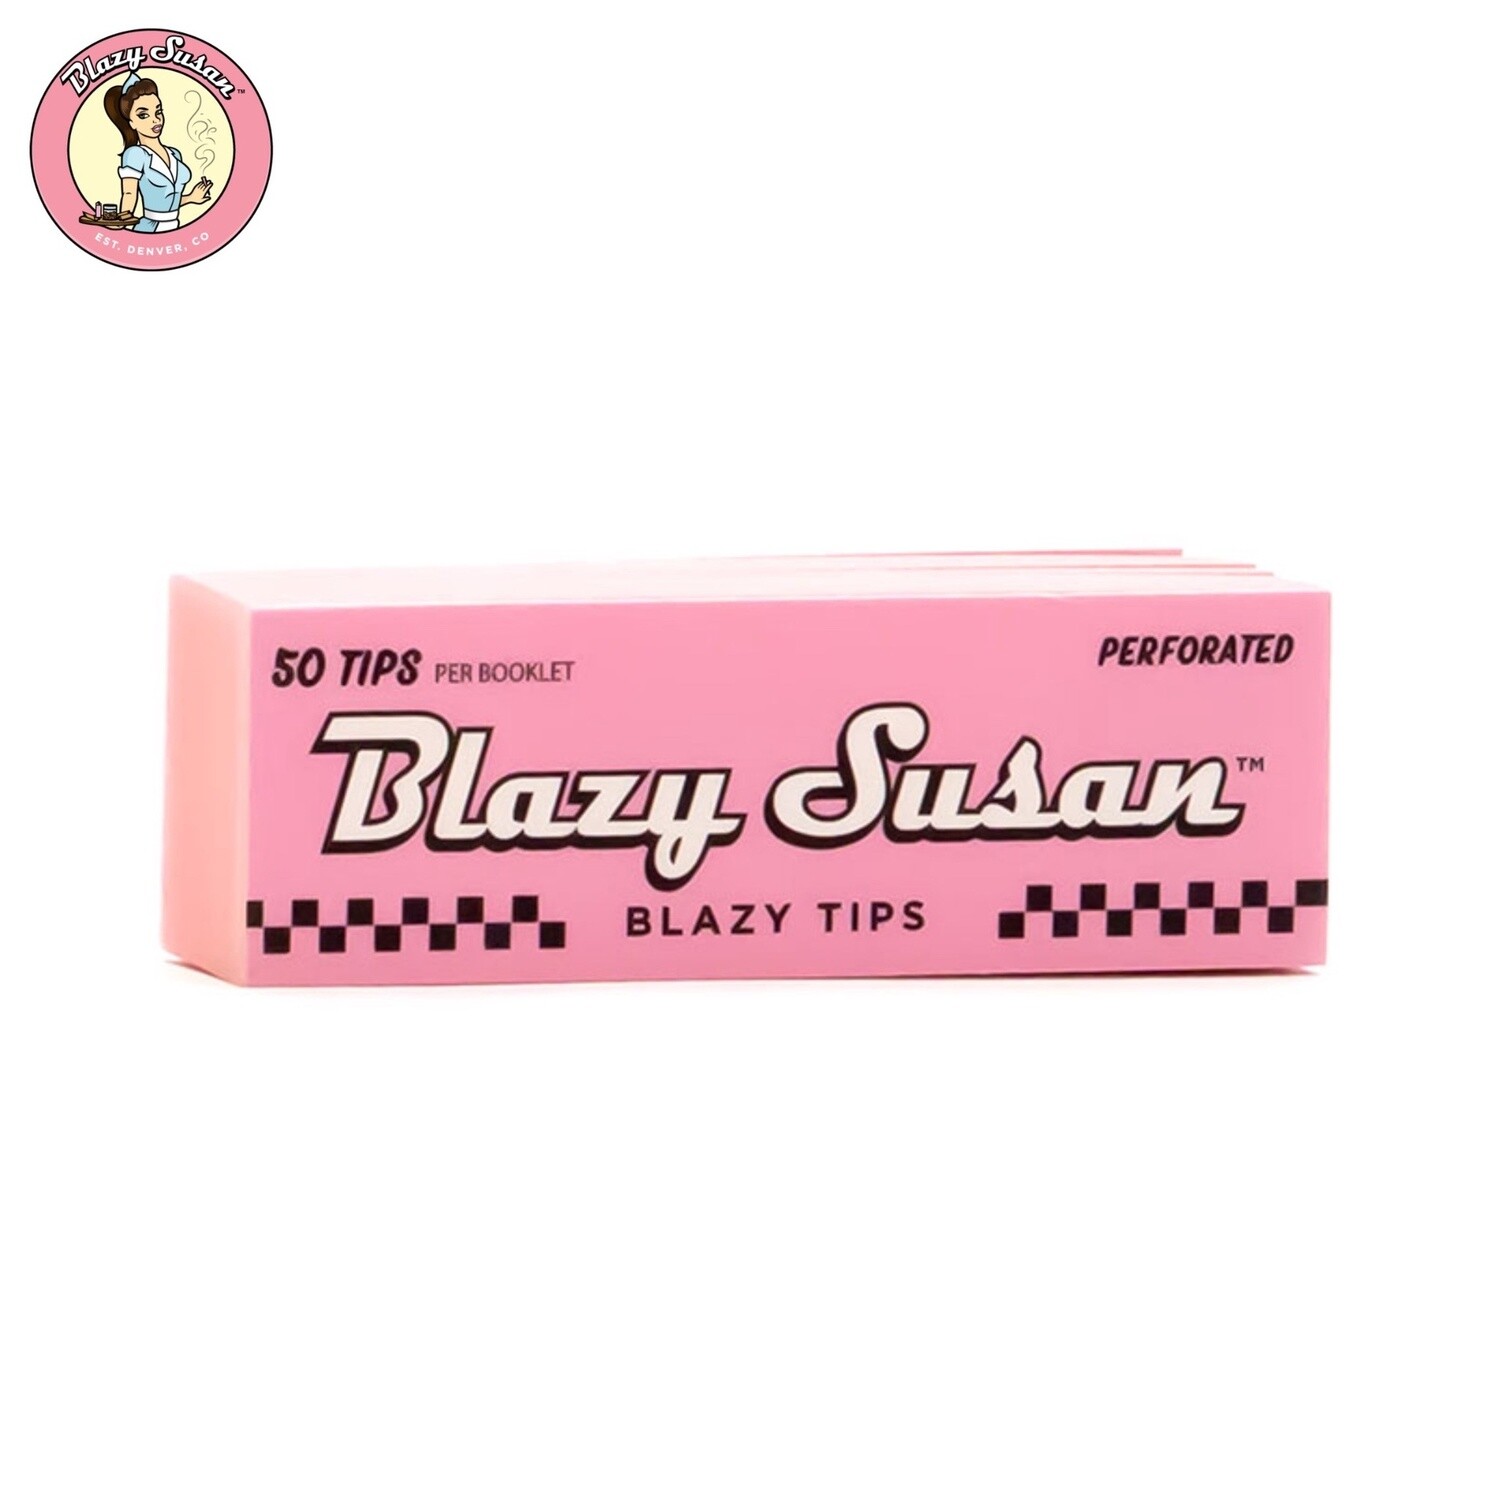 Blazy Susan™ Tips